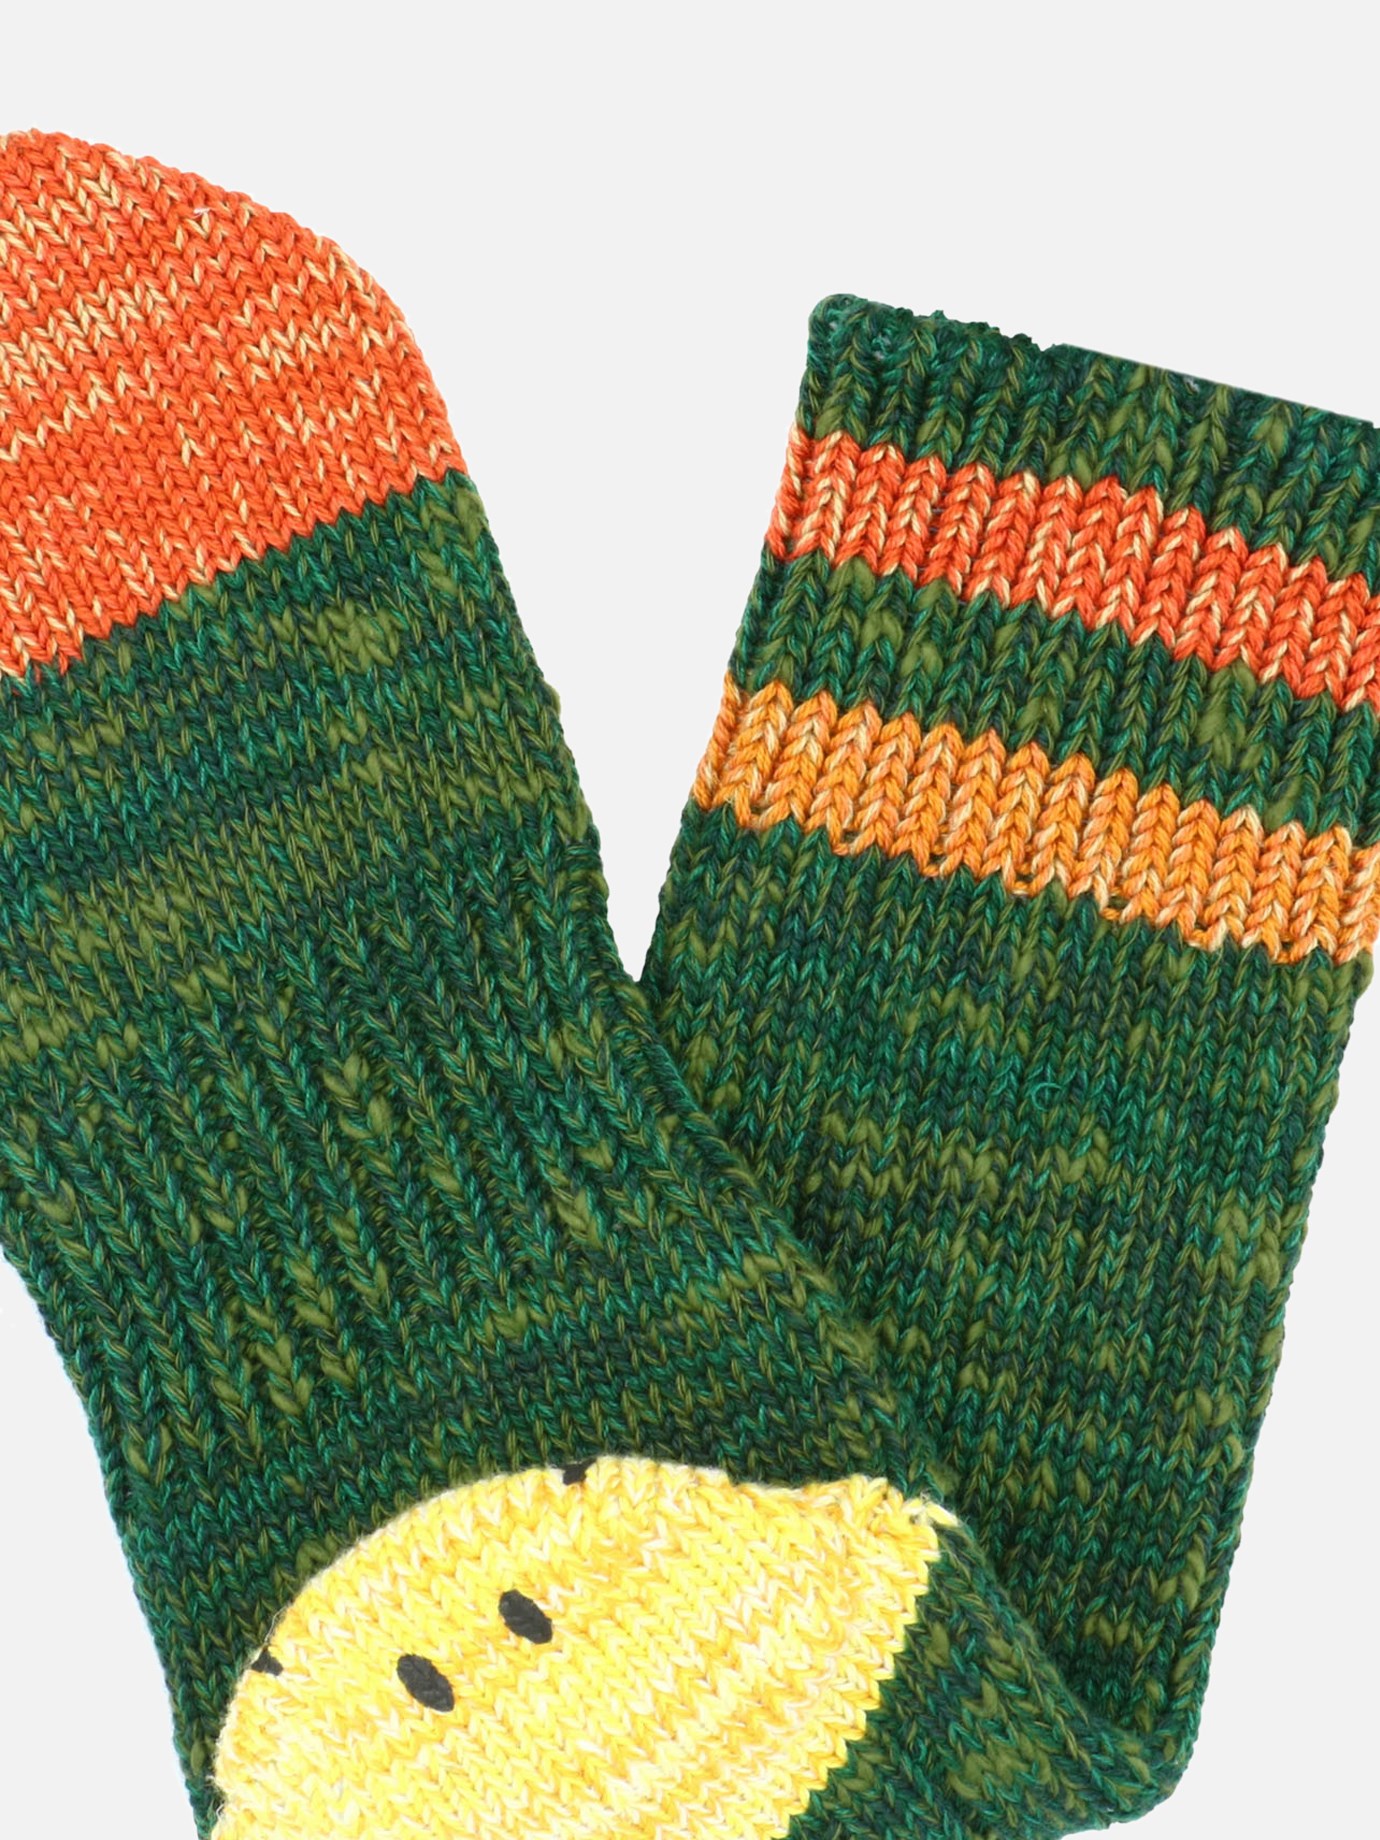  Happy Heel  socks by Kapital